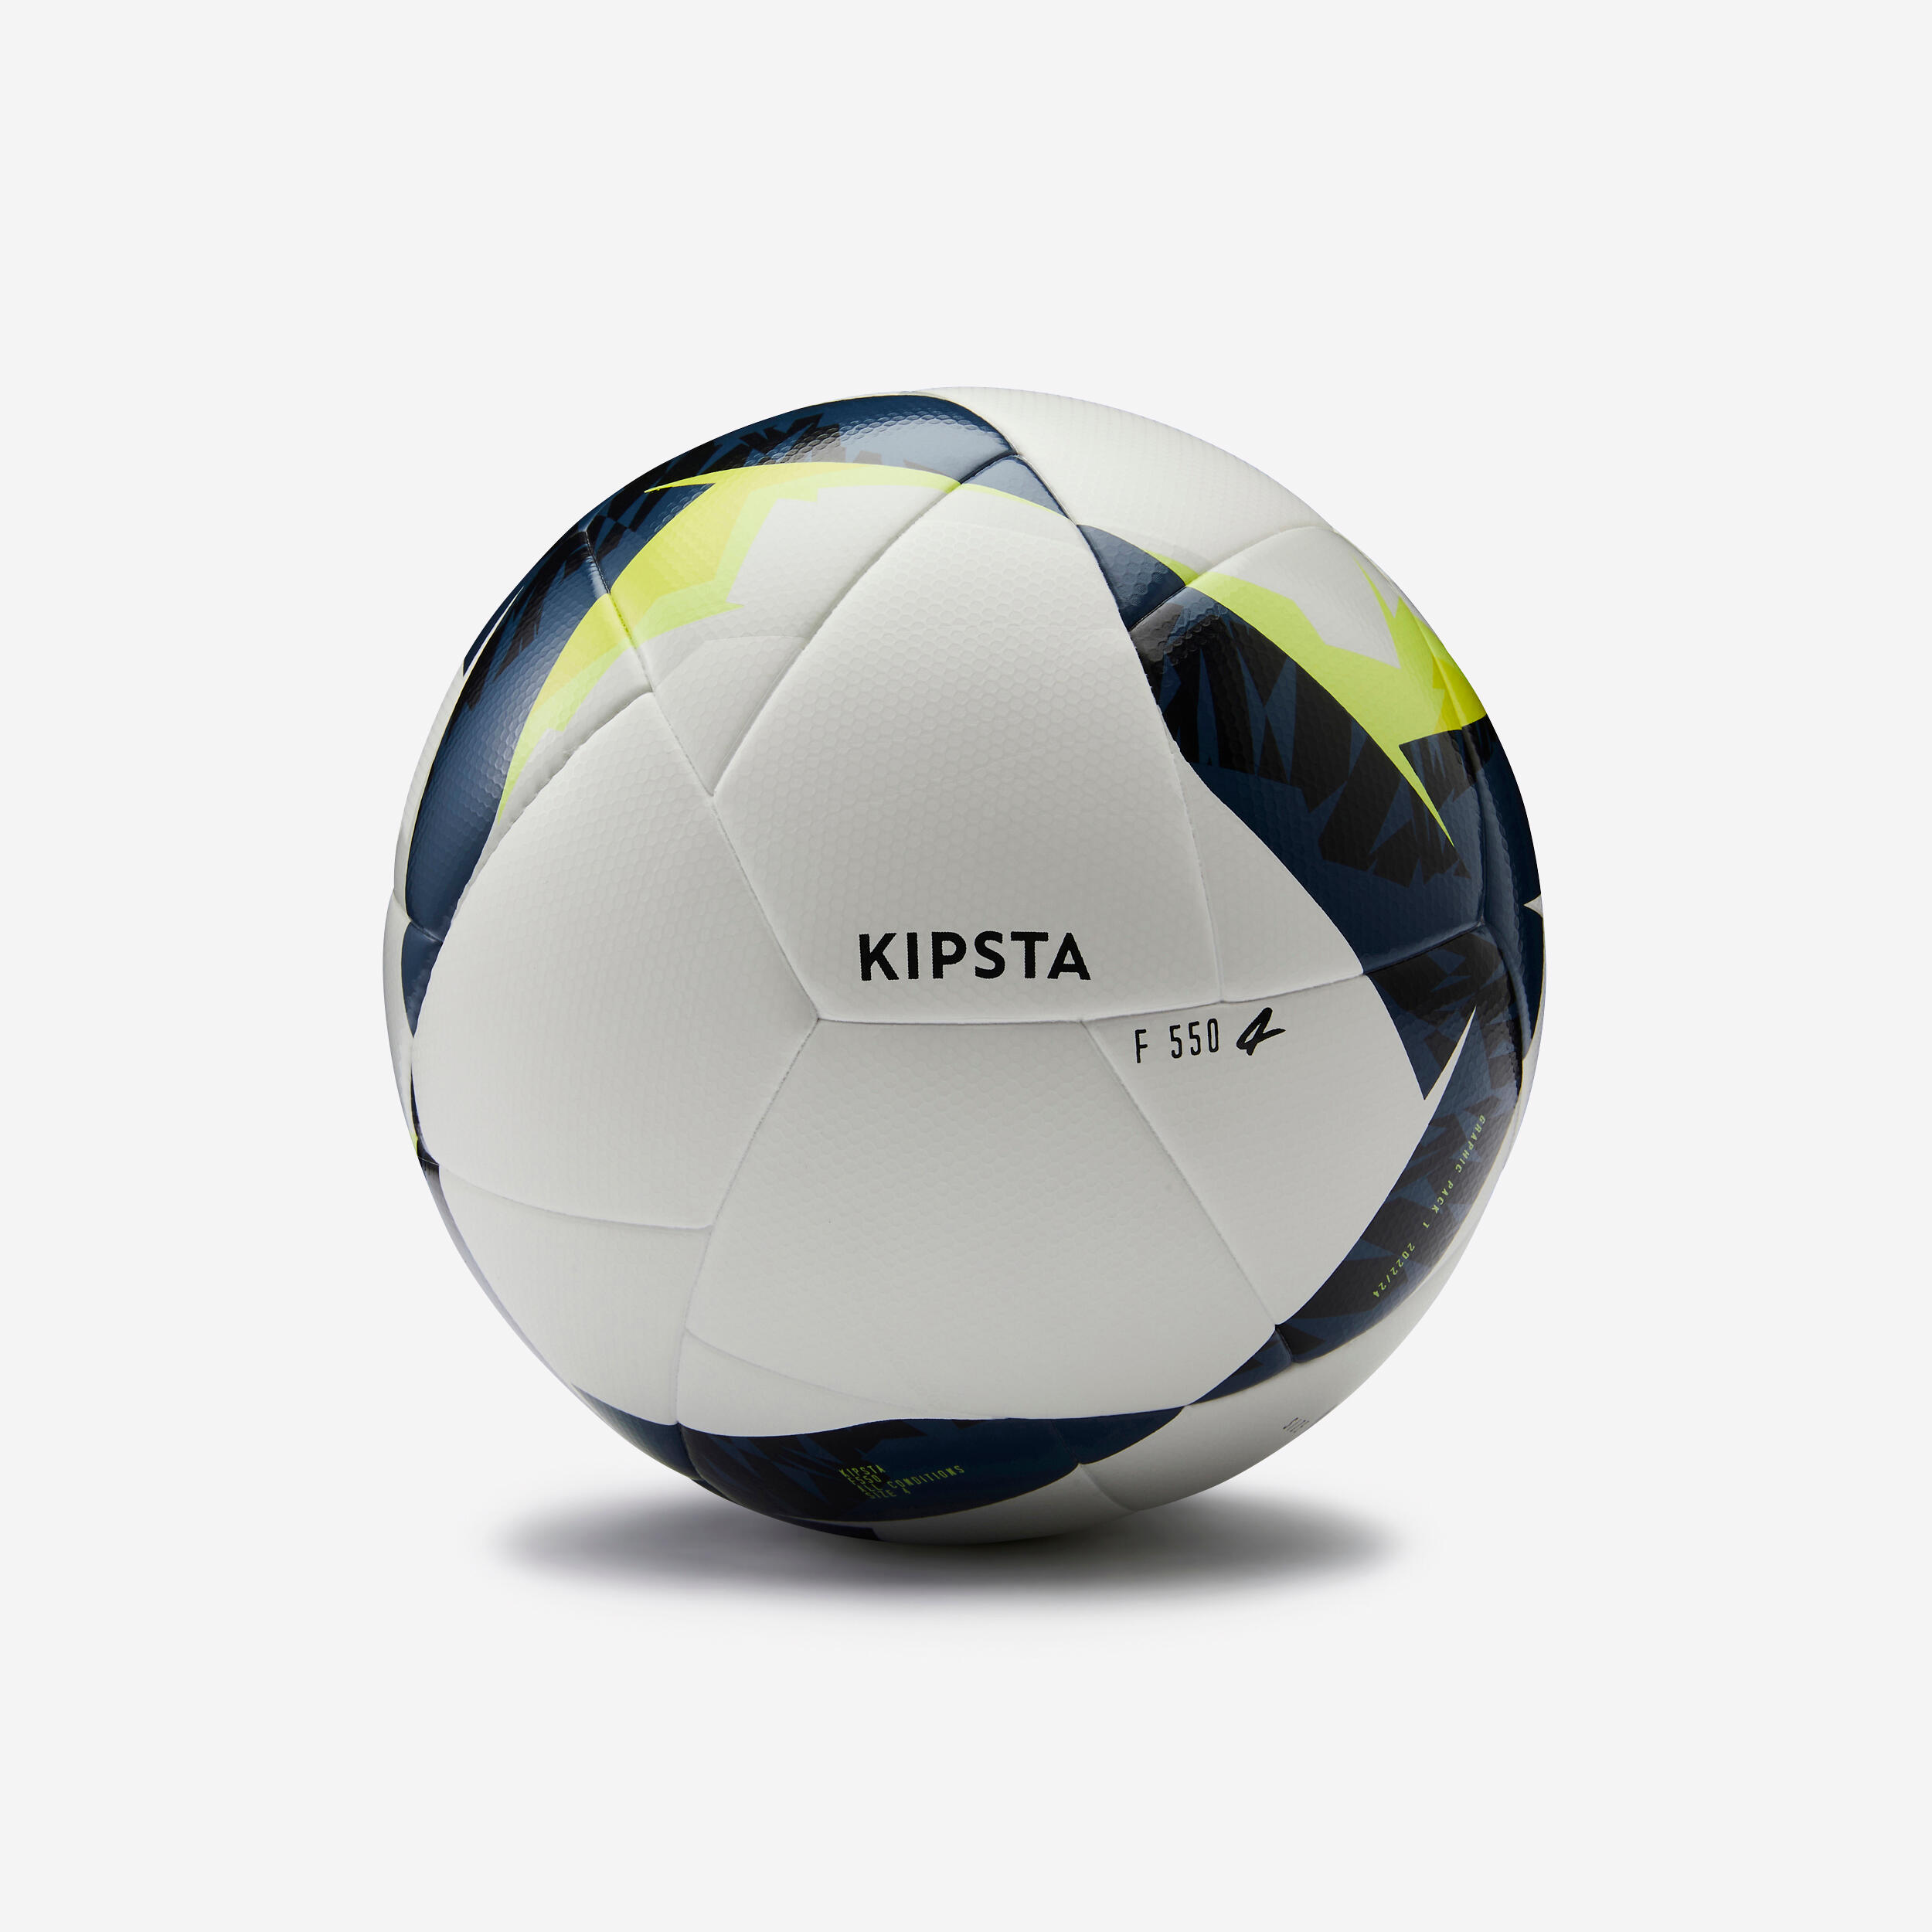 Hybrid Football FIFA Basic F550 Size 4 - White/Yellow 2/7